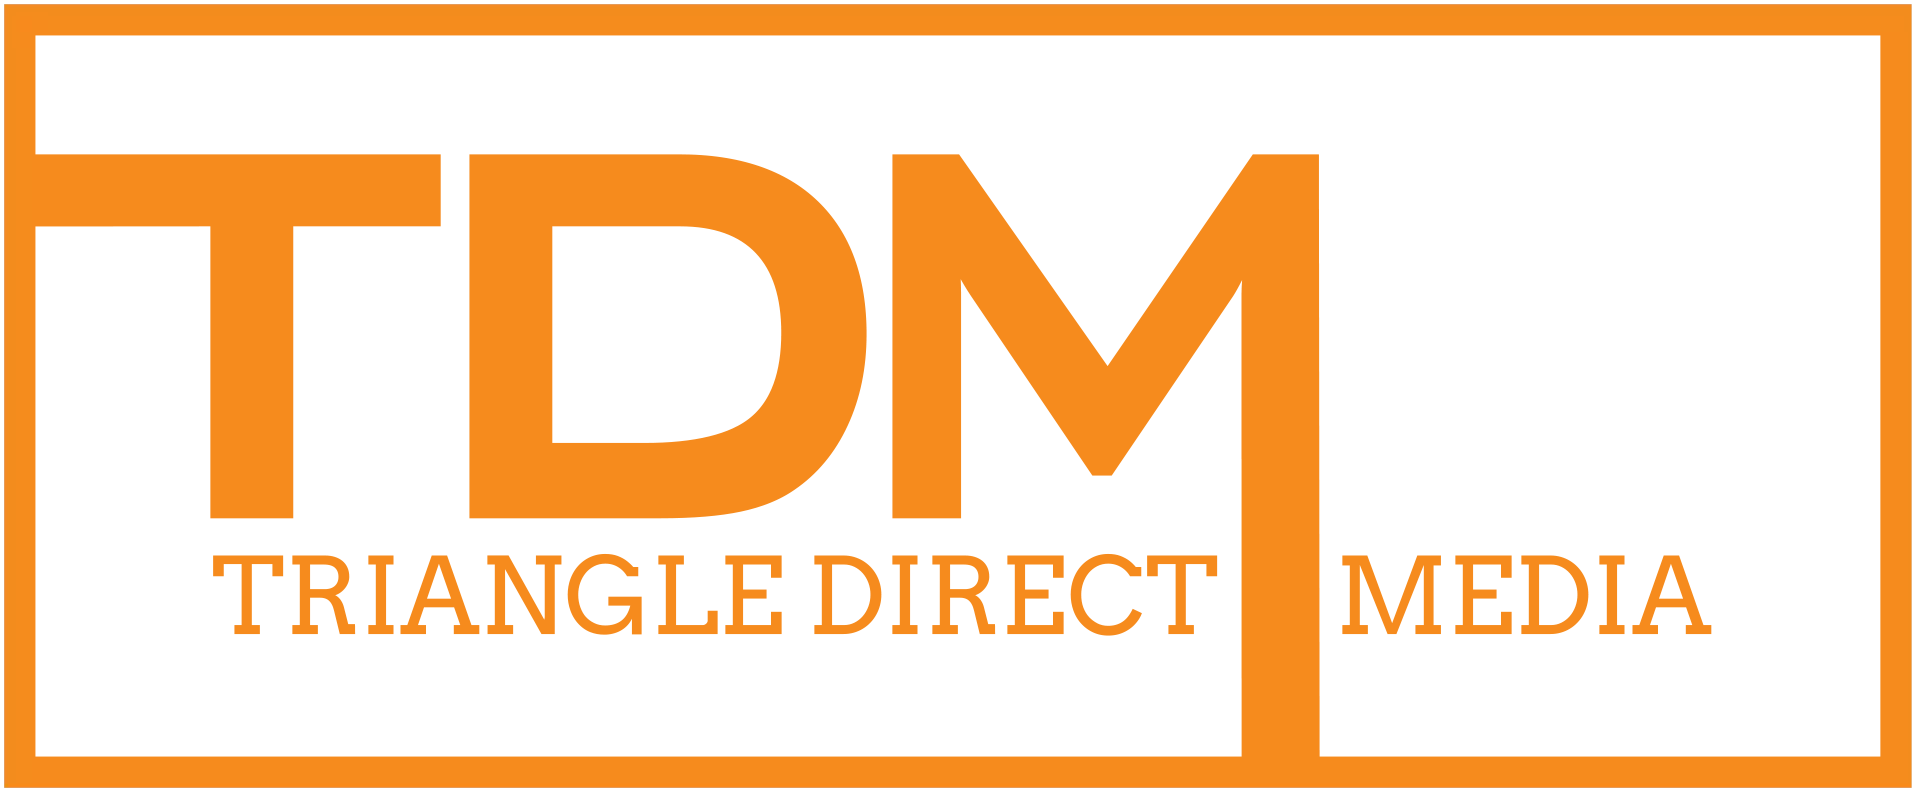 Triangle Direct Media Logo